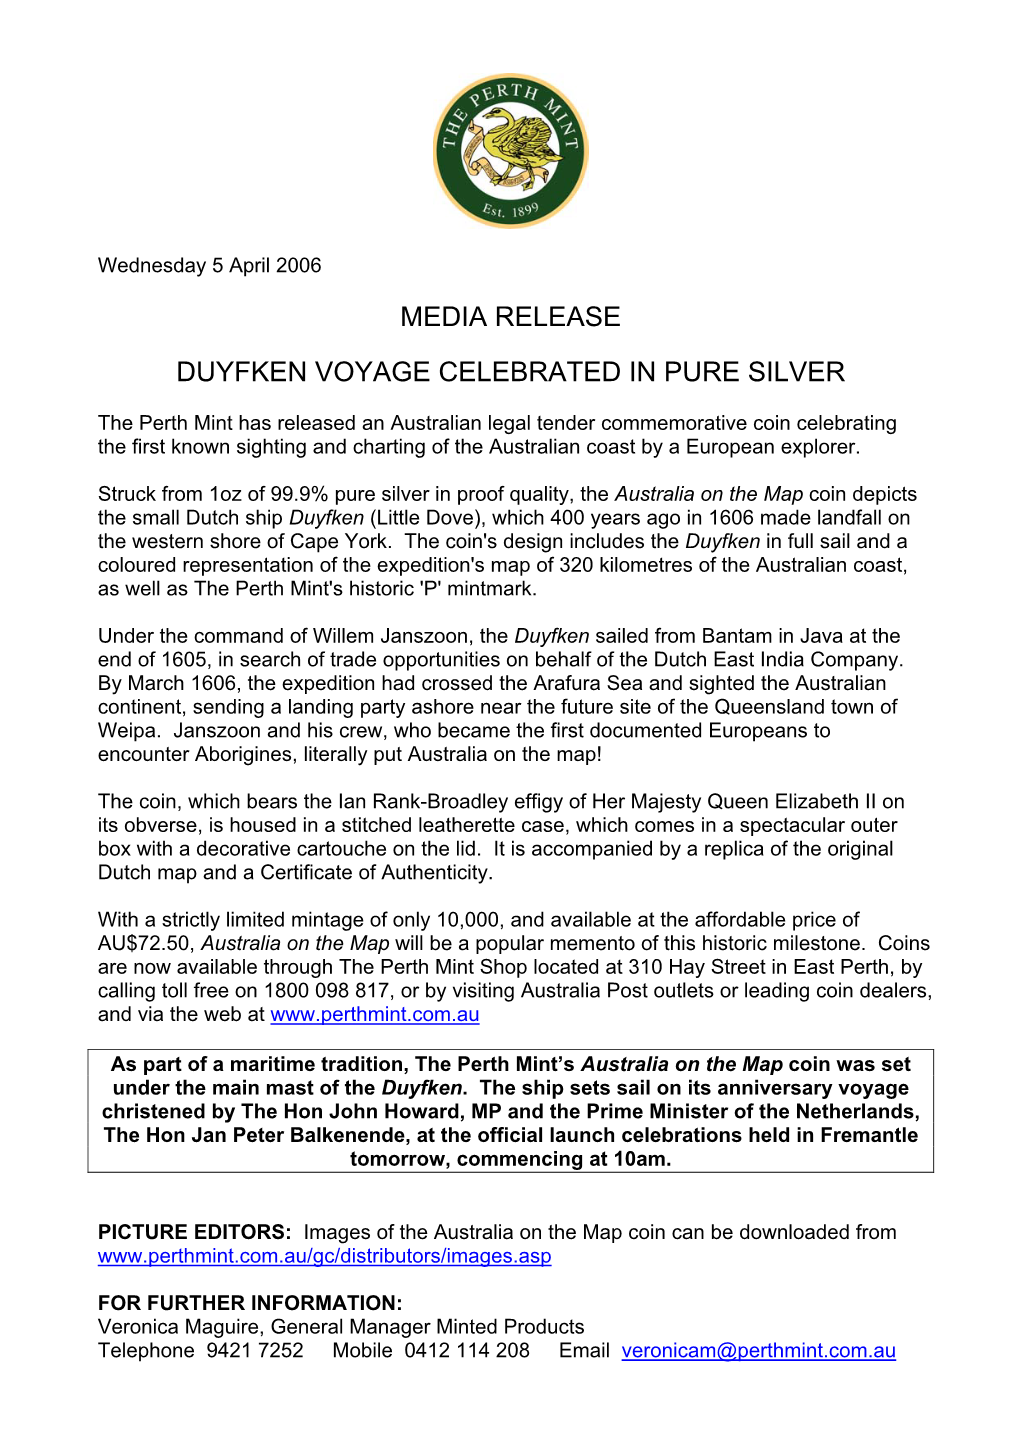 Media Release Duyfken Voyage Celebrated in Pure